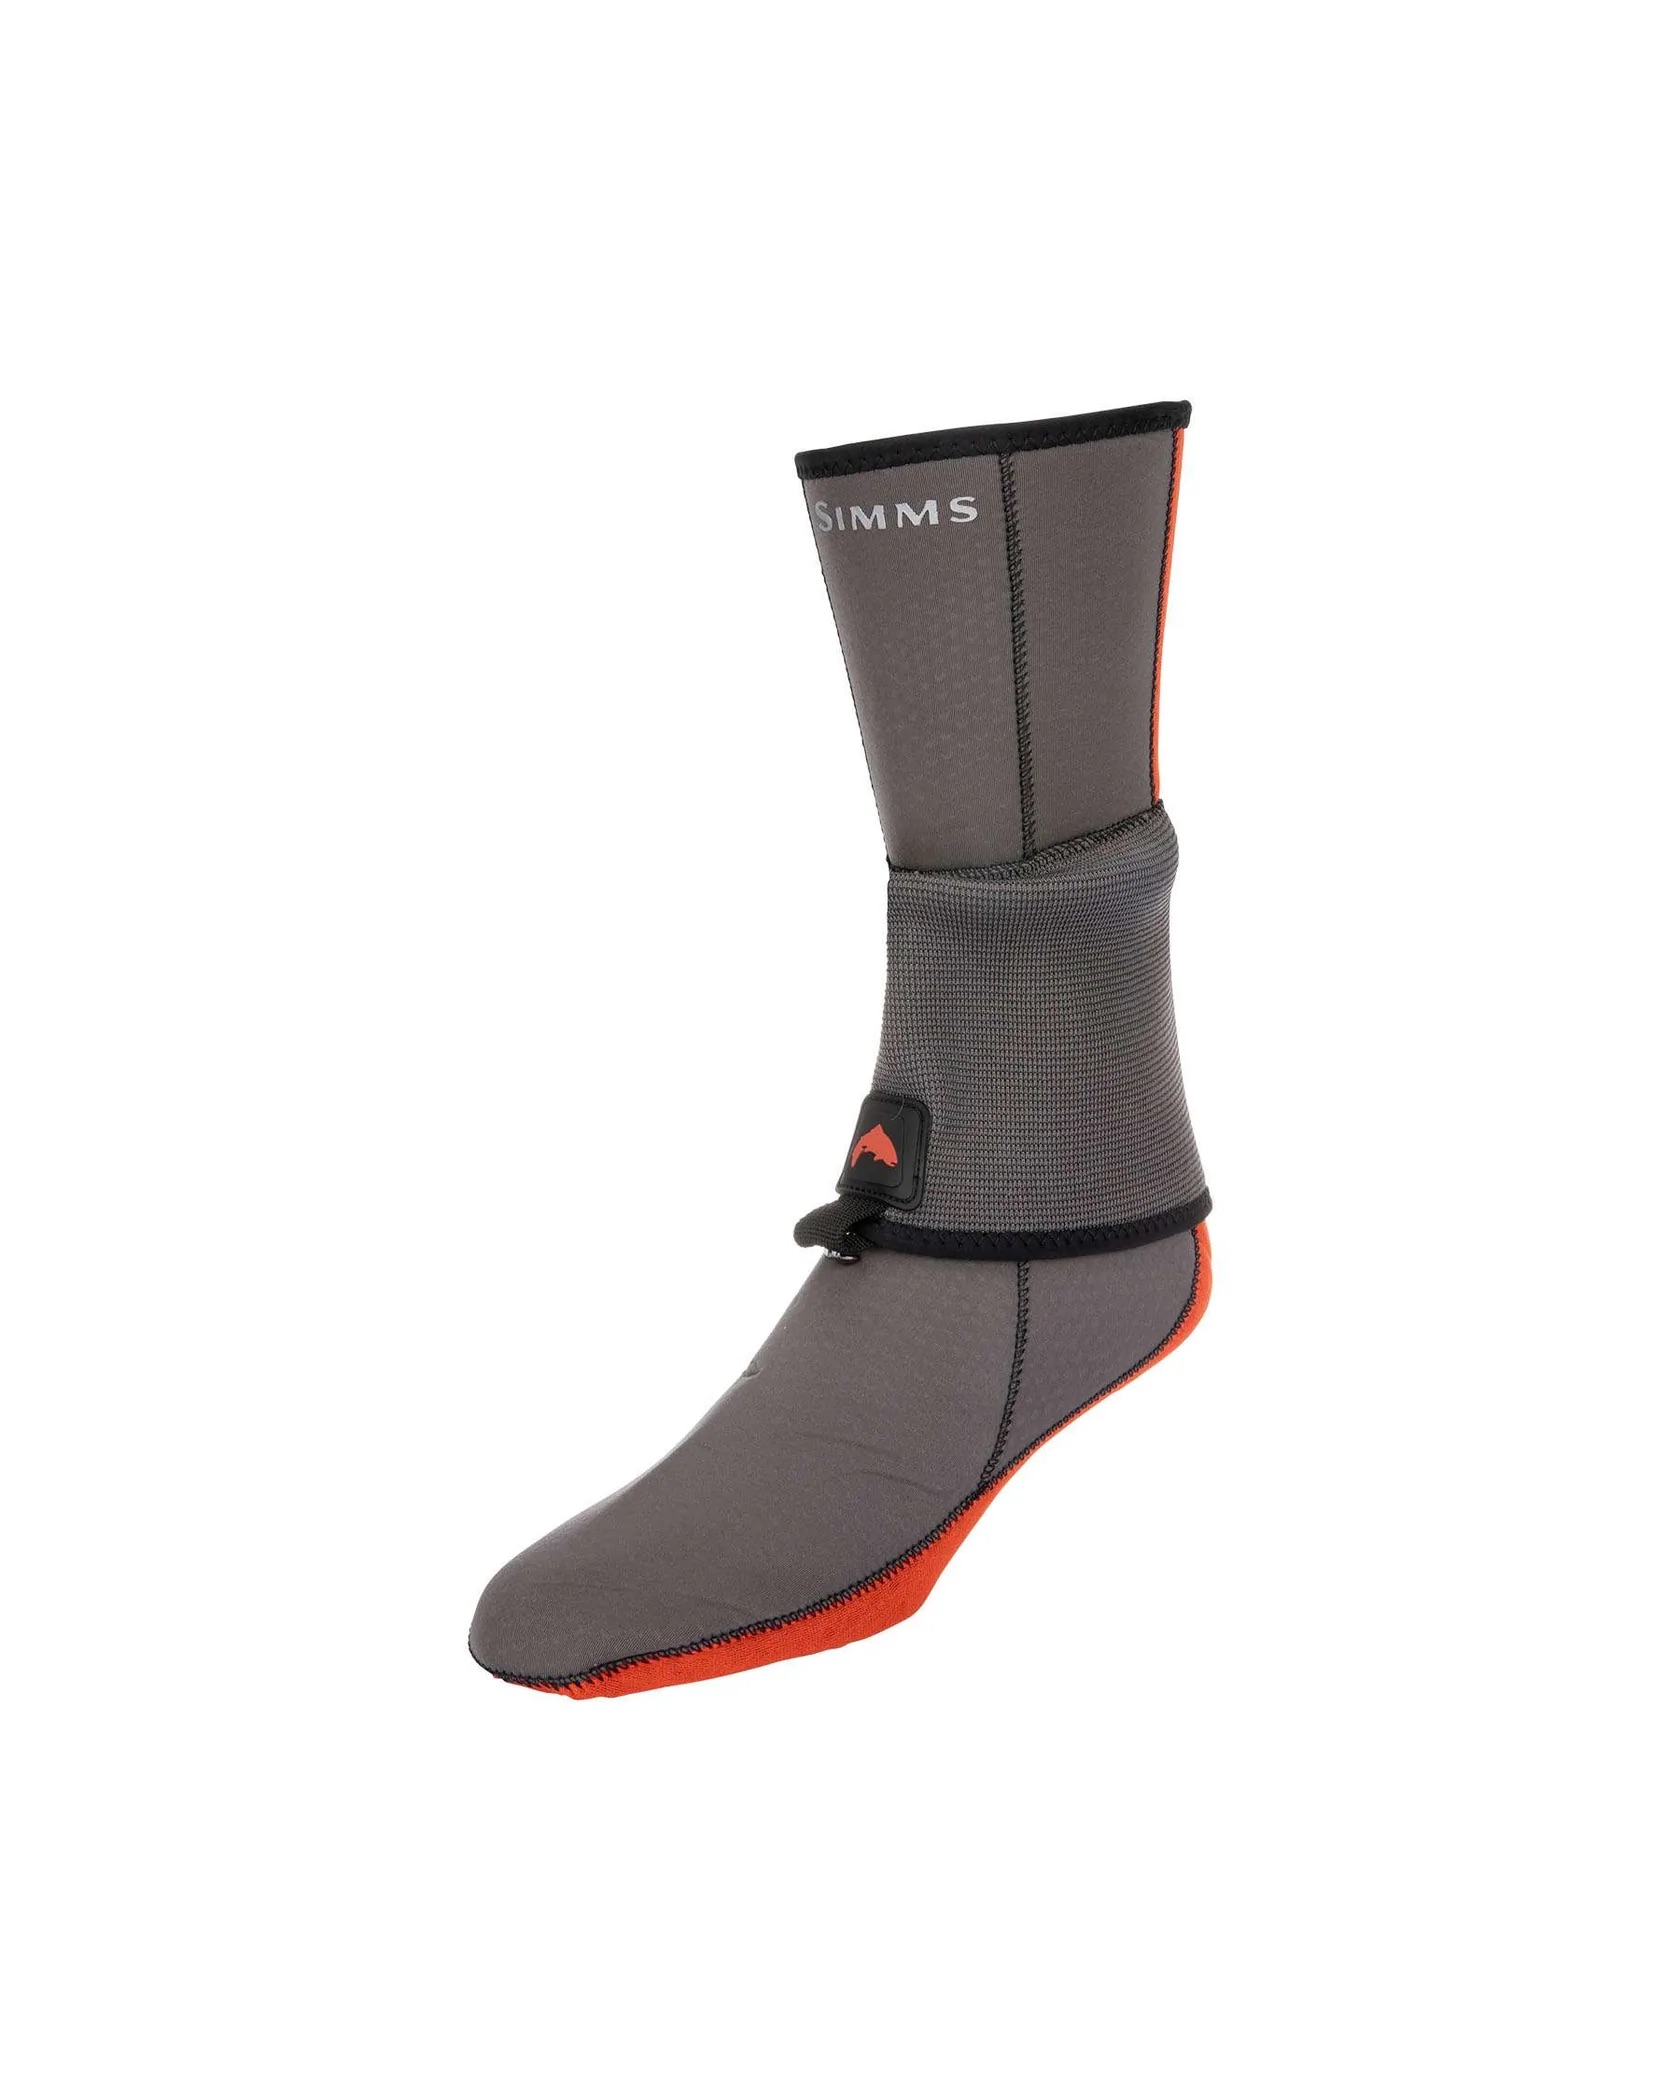 Simms M's Neoprene Flyweight Wading Sock - XL